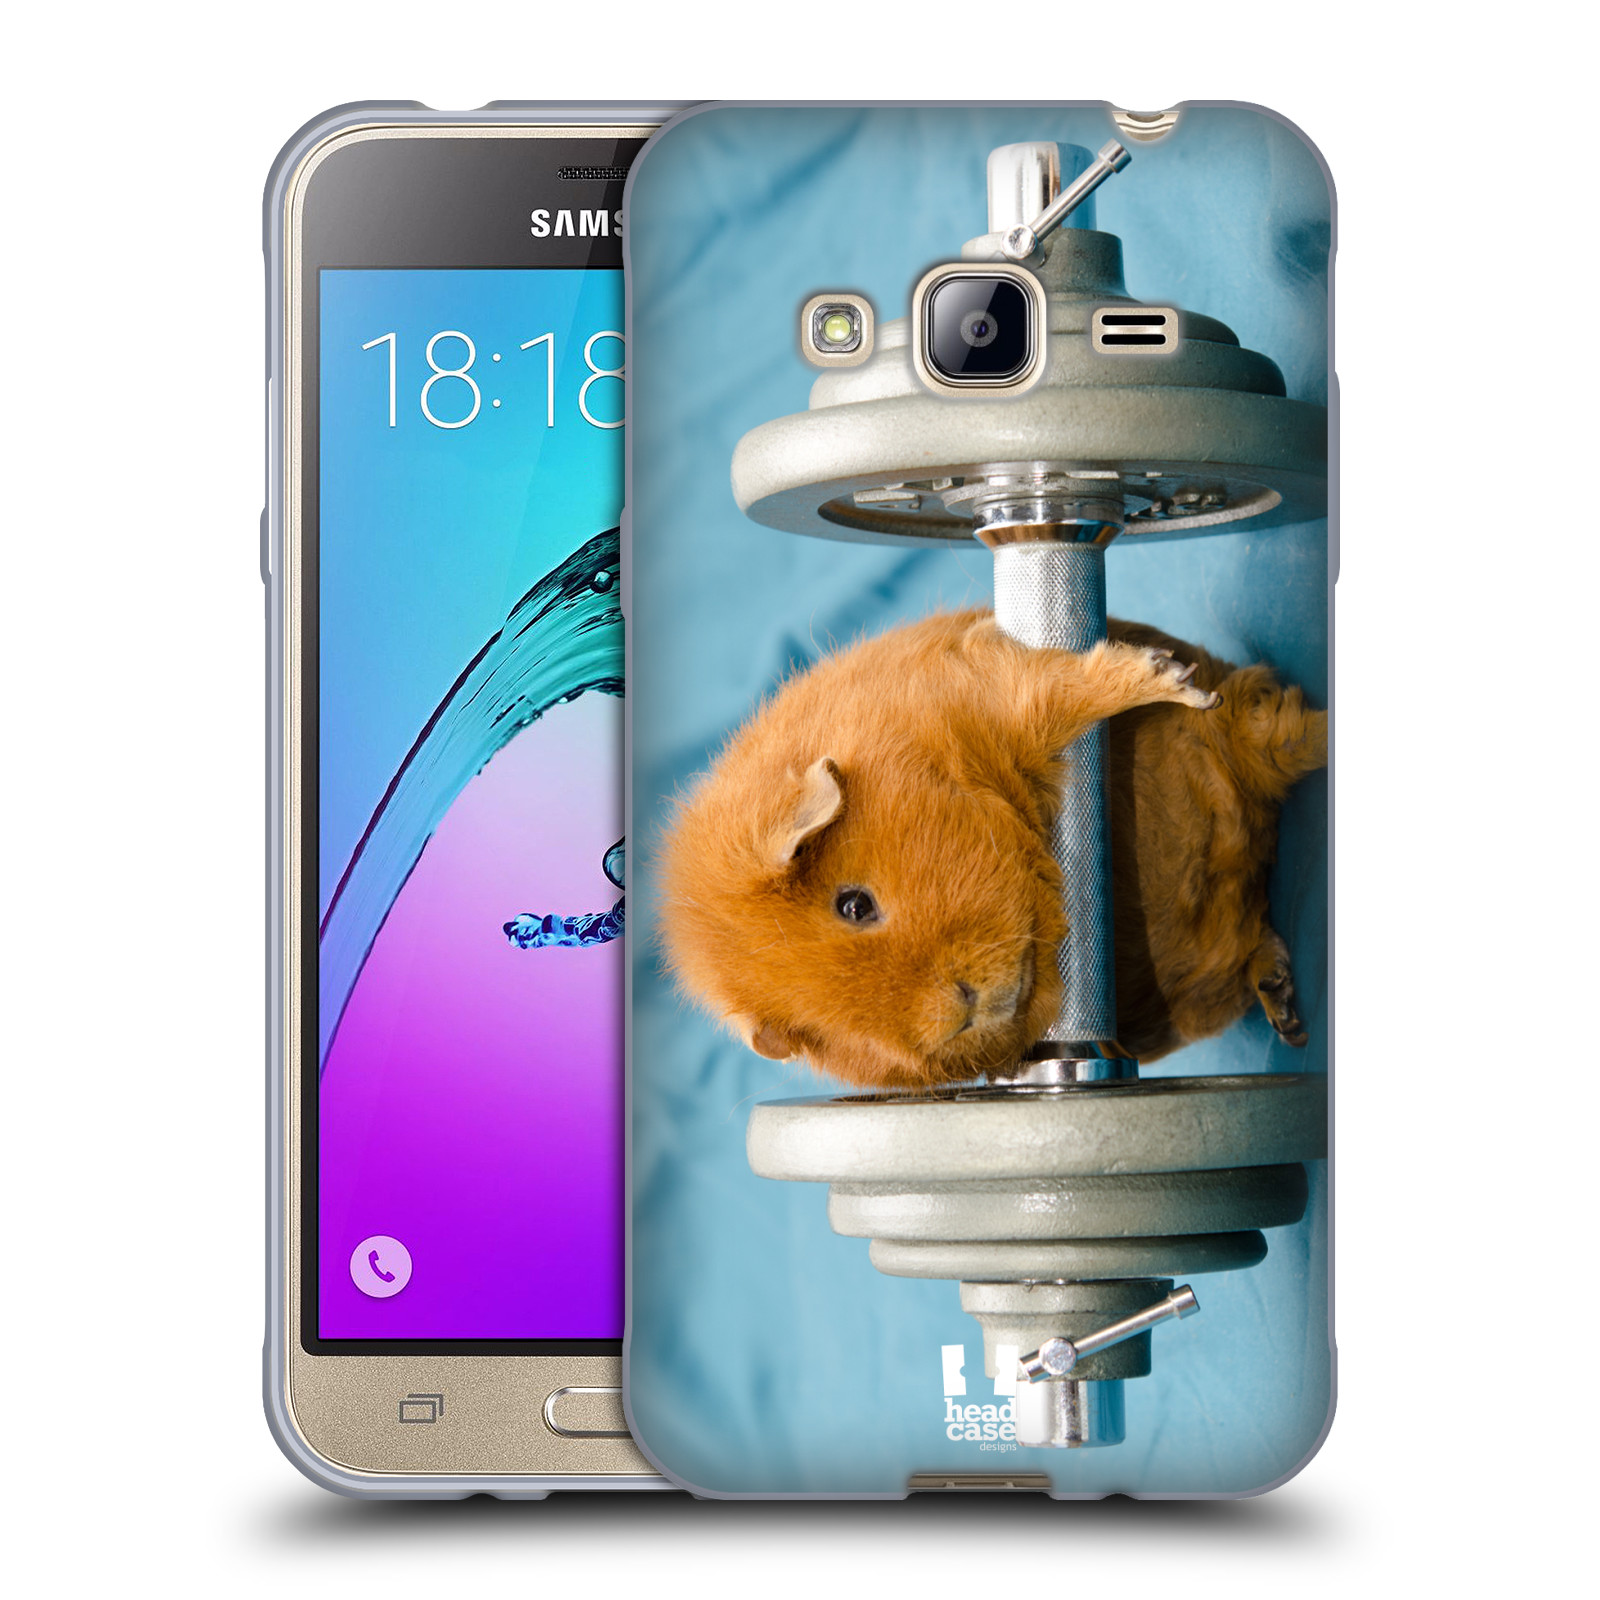 HEAD CASE silikonový obal na mobil Samsung Galaxy J3, J3 2016 vzor Legrační zvířátka křeček/morče silák